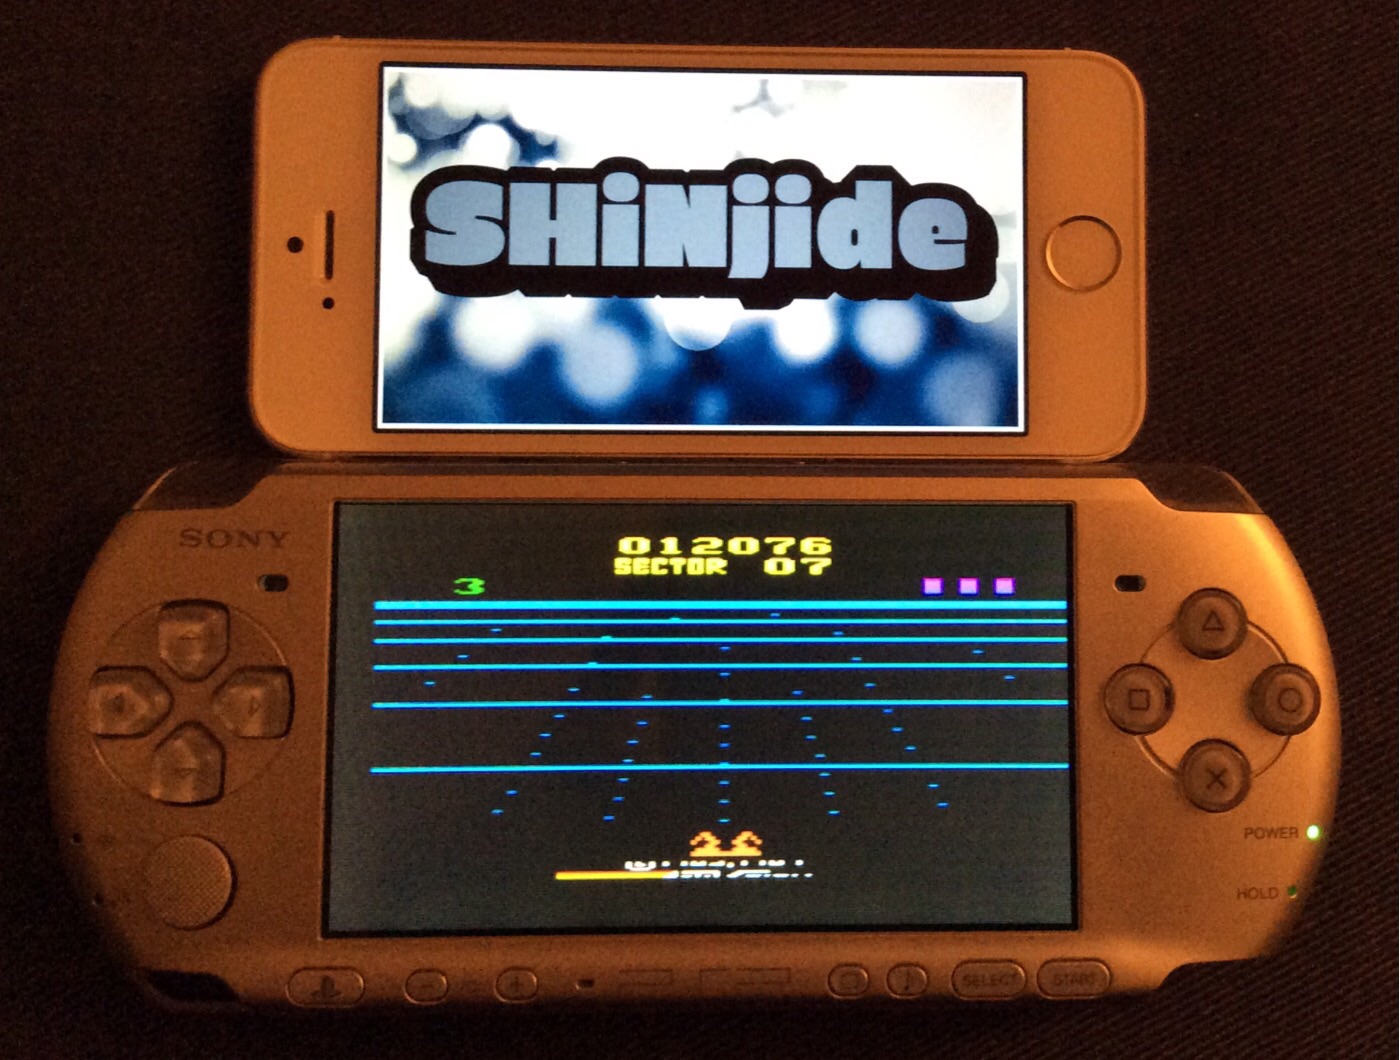 SHiNjide: Activision Hits Remixed: Beamrider (PSP) 12,076 points on 2015-01-06 15:15:36